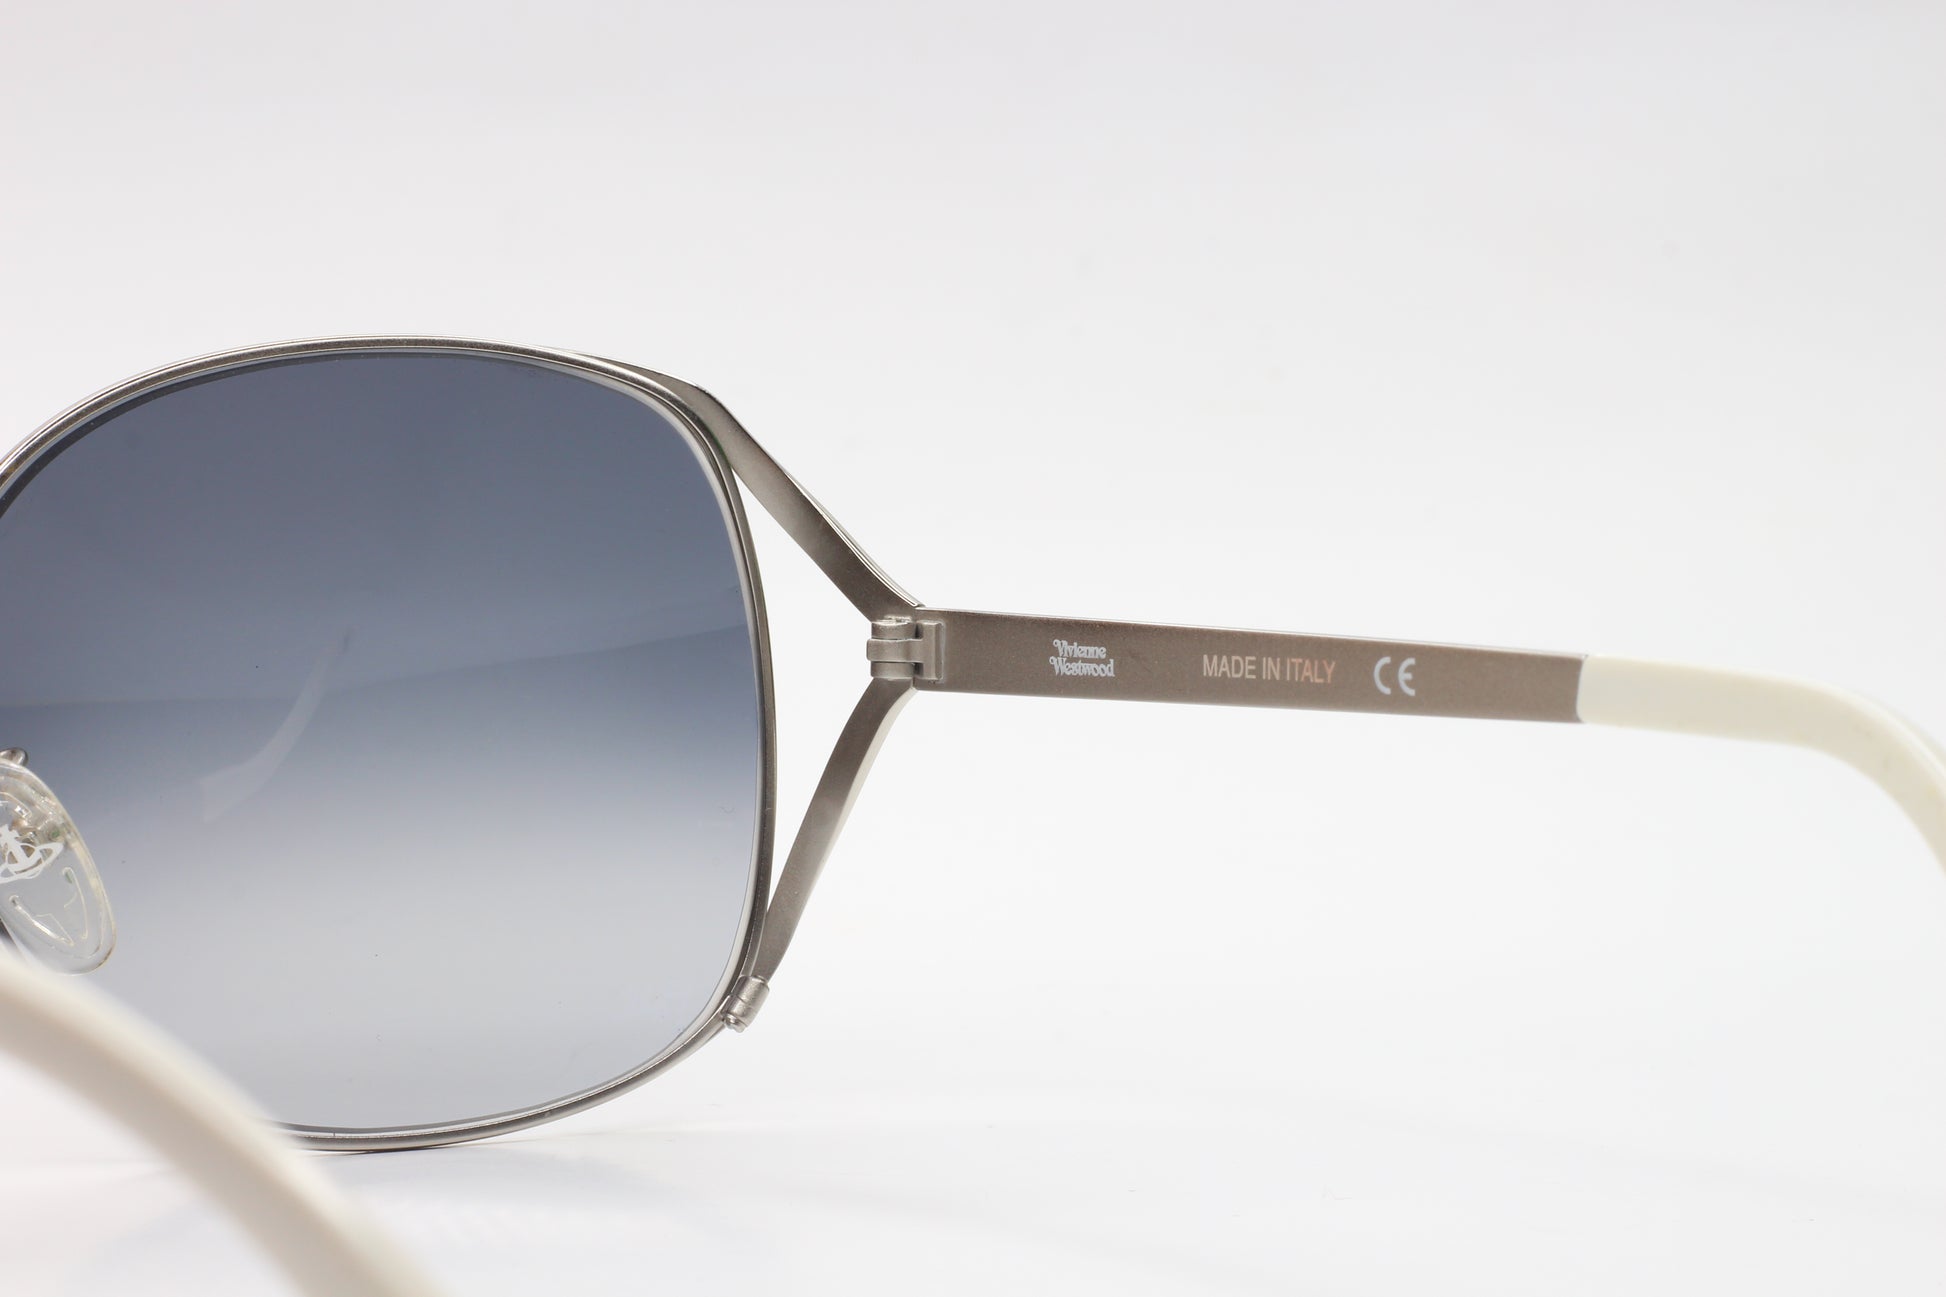 Vivienne Westwood VW713 02 Silver Designer White Metal Luxury Sunglasses - ABC Optical